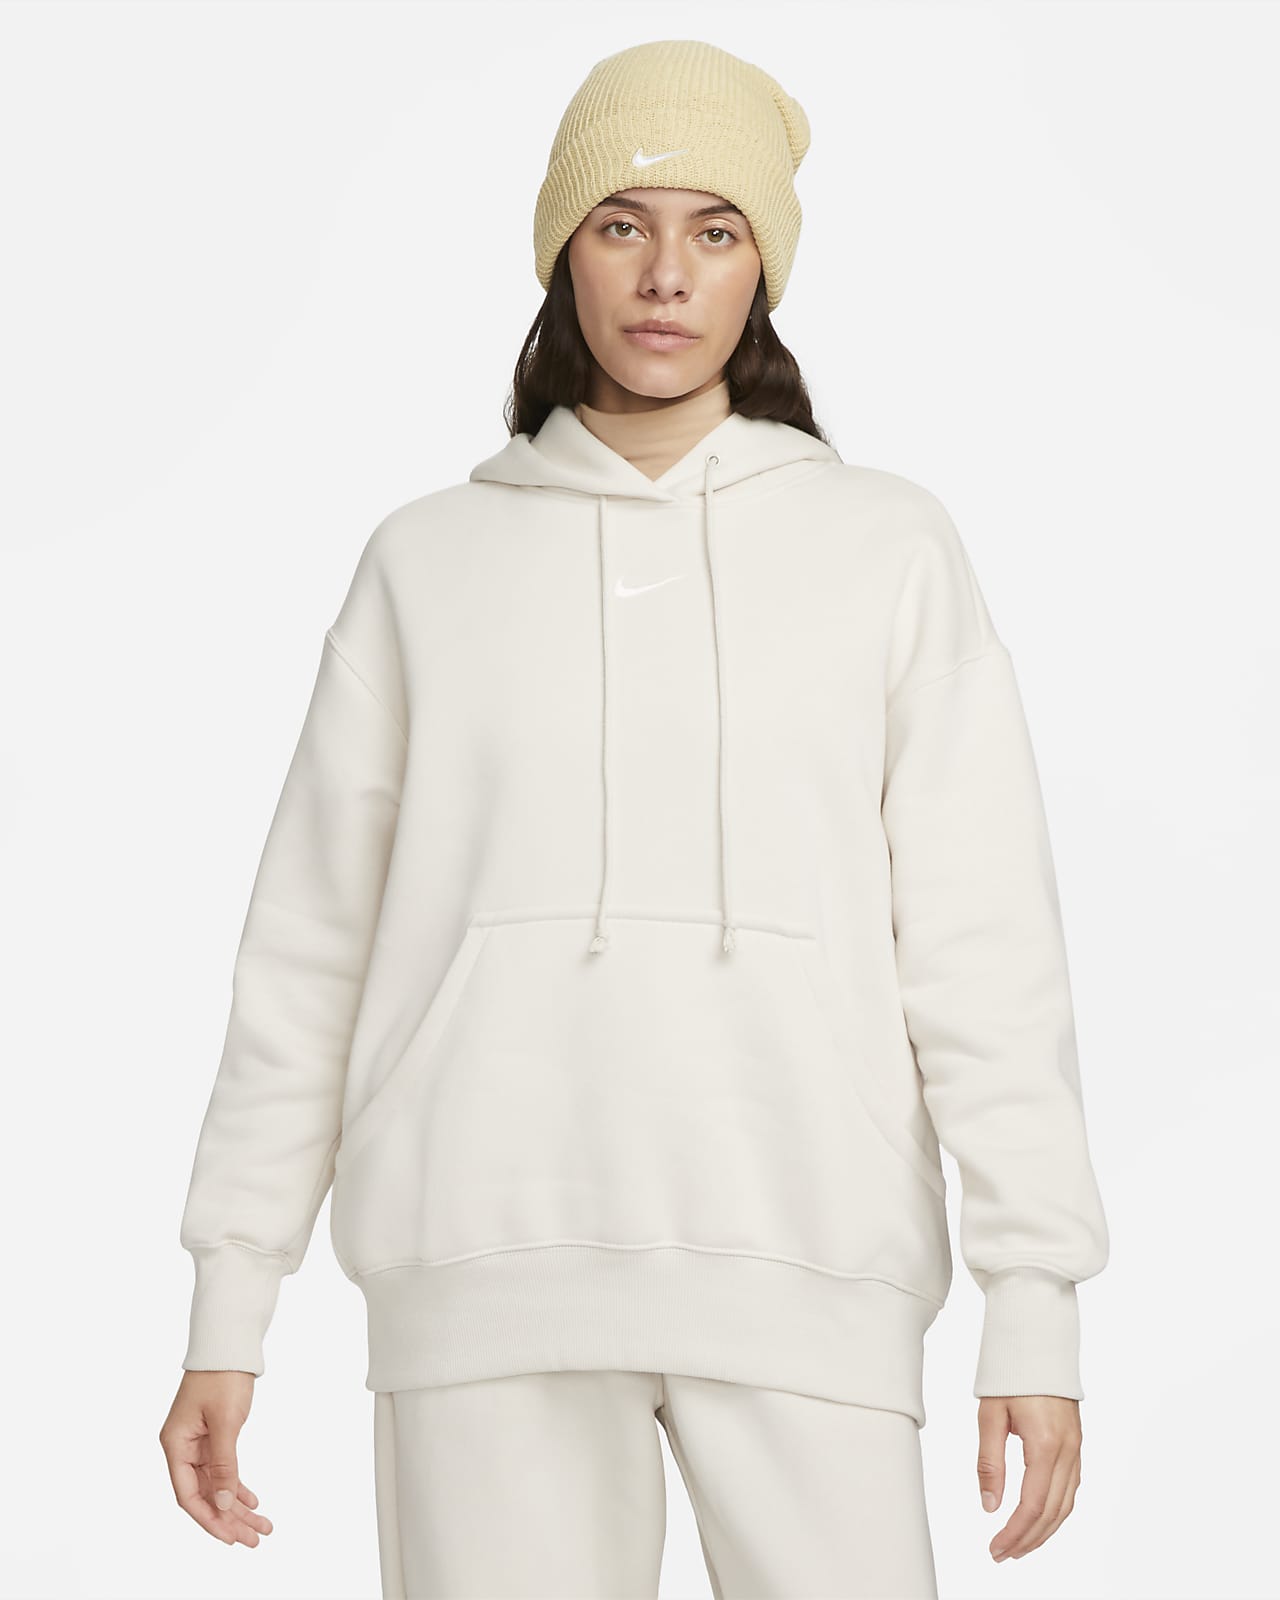 Oversized Nike Sportswear Phoenix Fleece-pullover-hættetrøje til kvinder